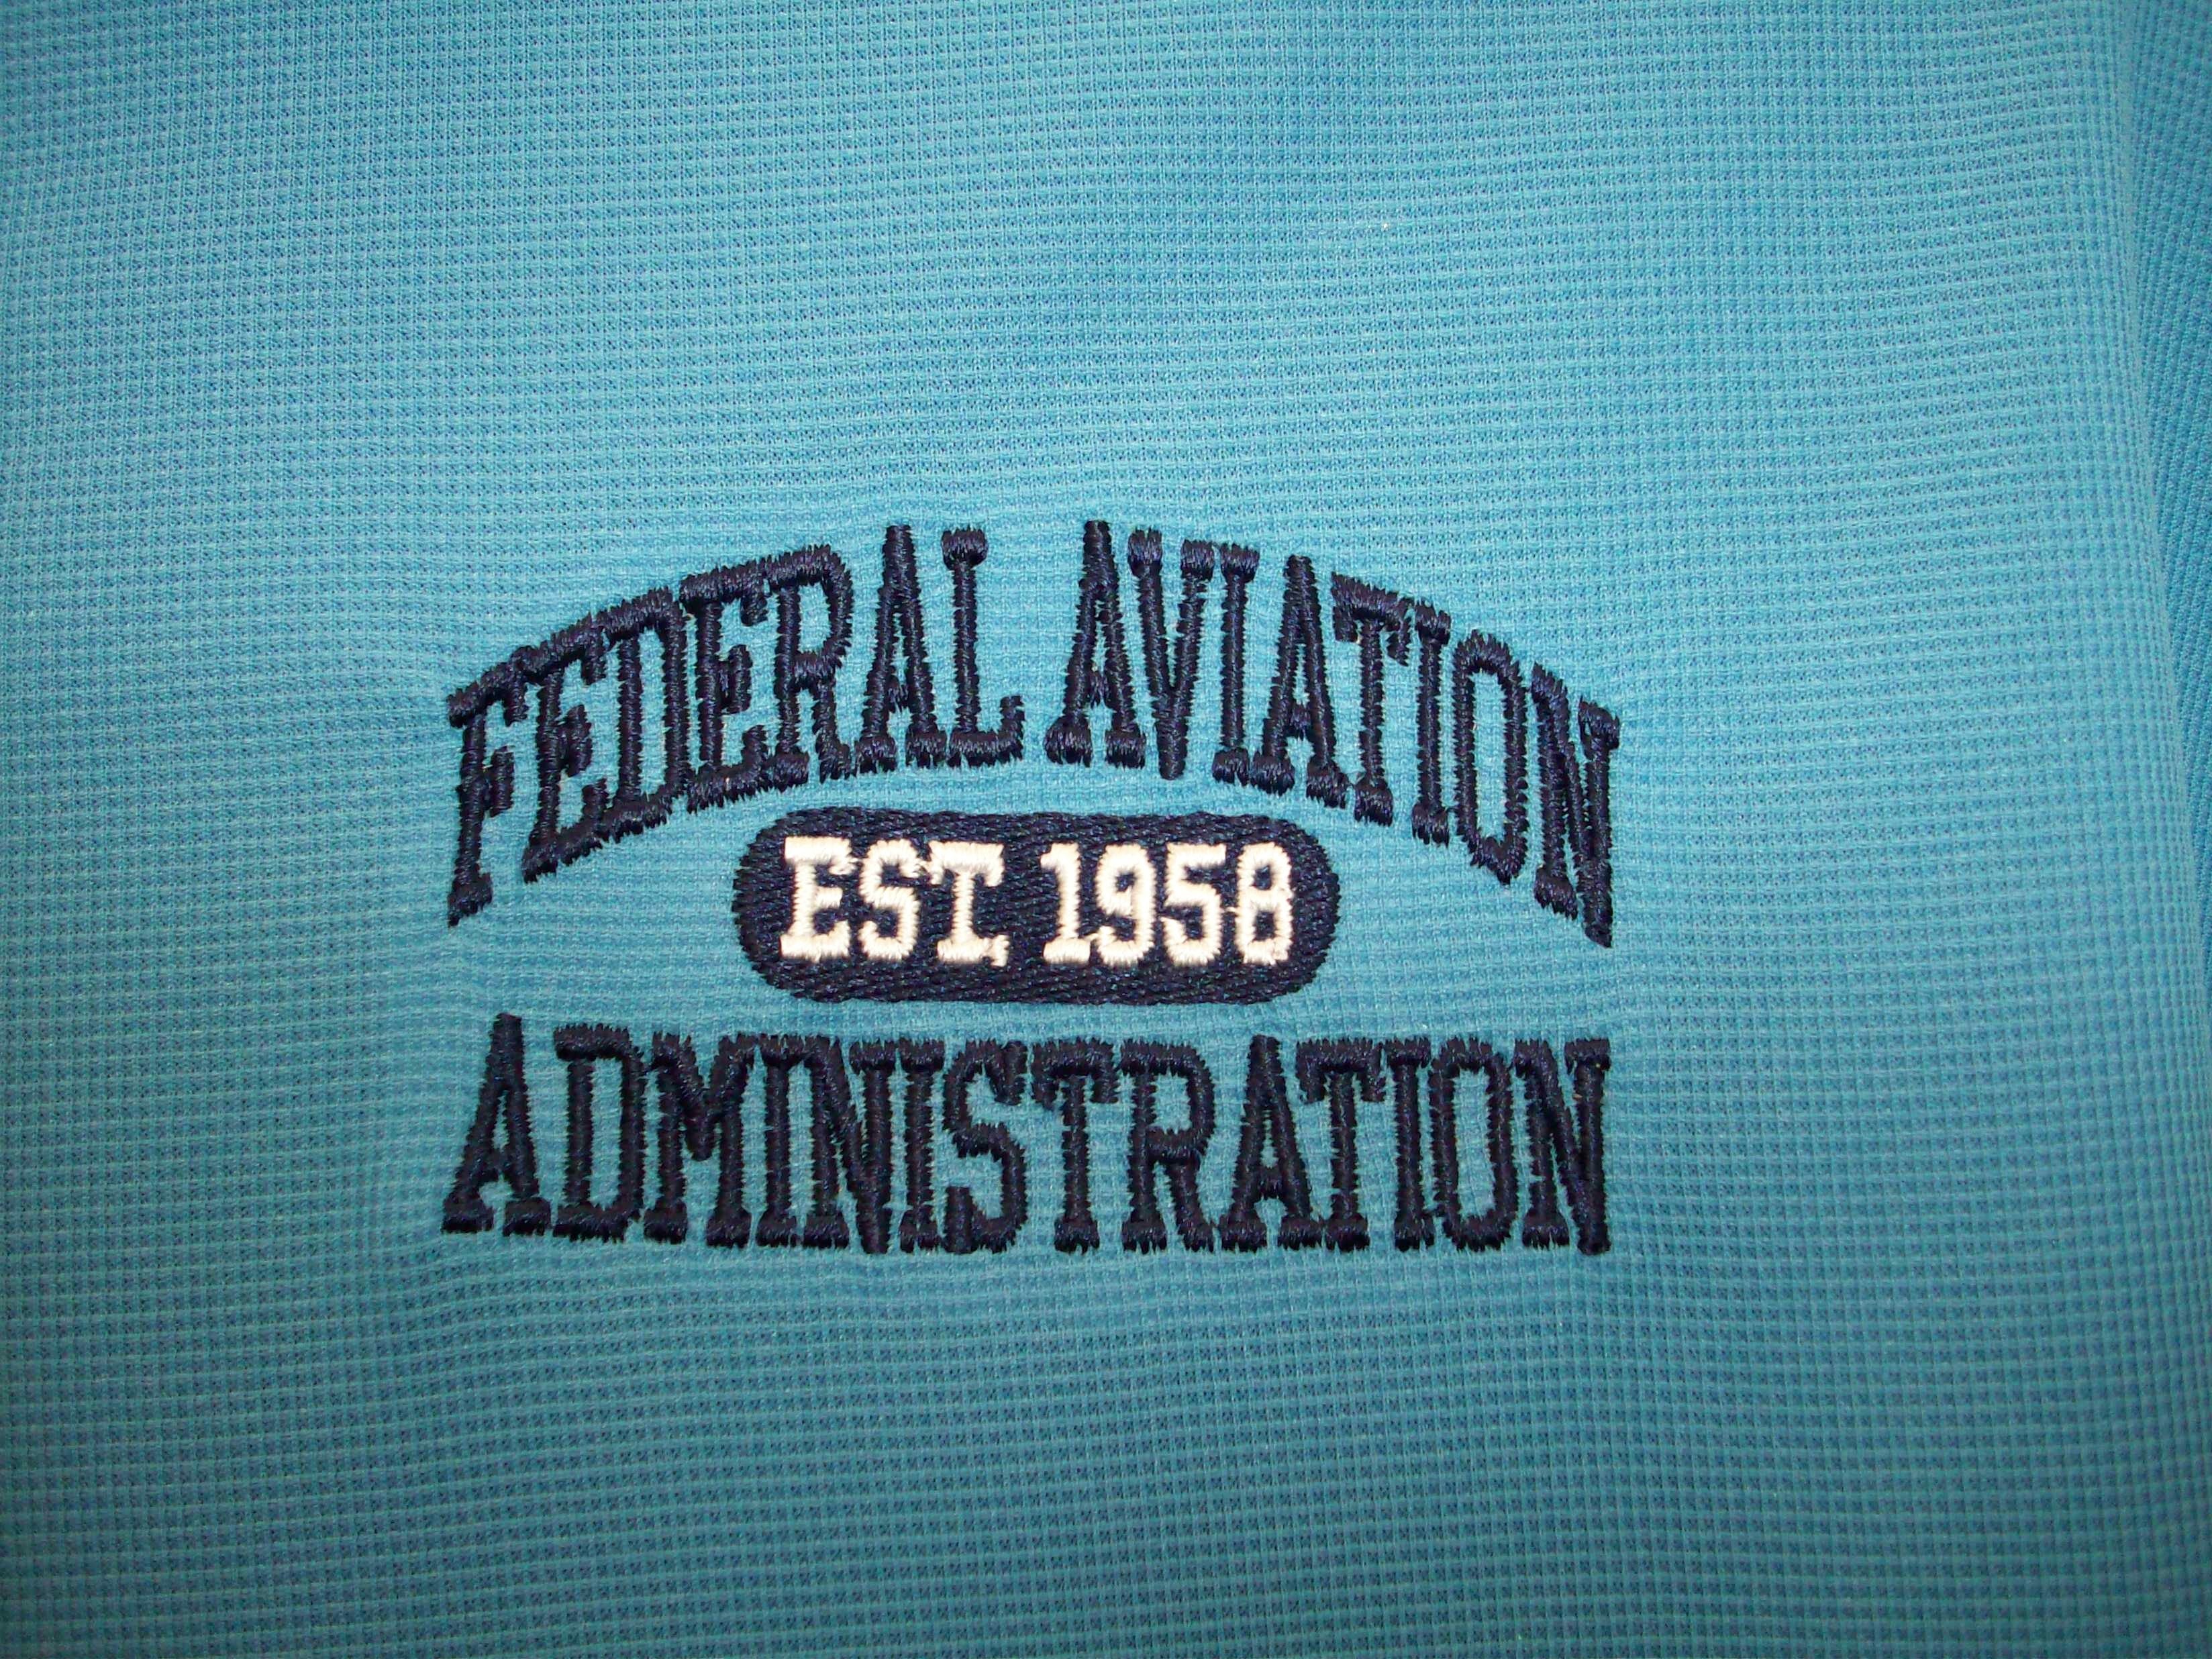 Polo Shirt FAA Dry Zone Grid - Celadon Blue